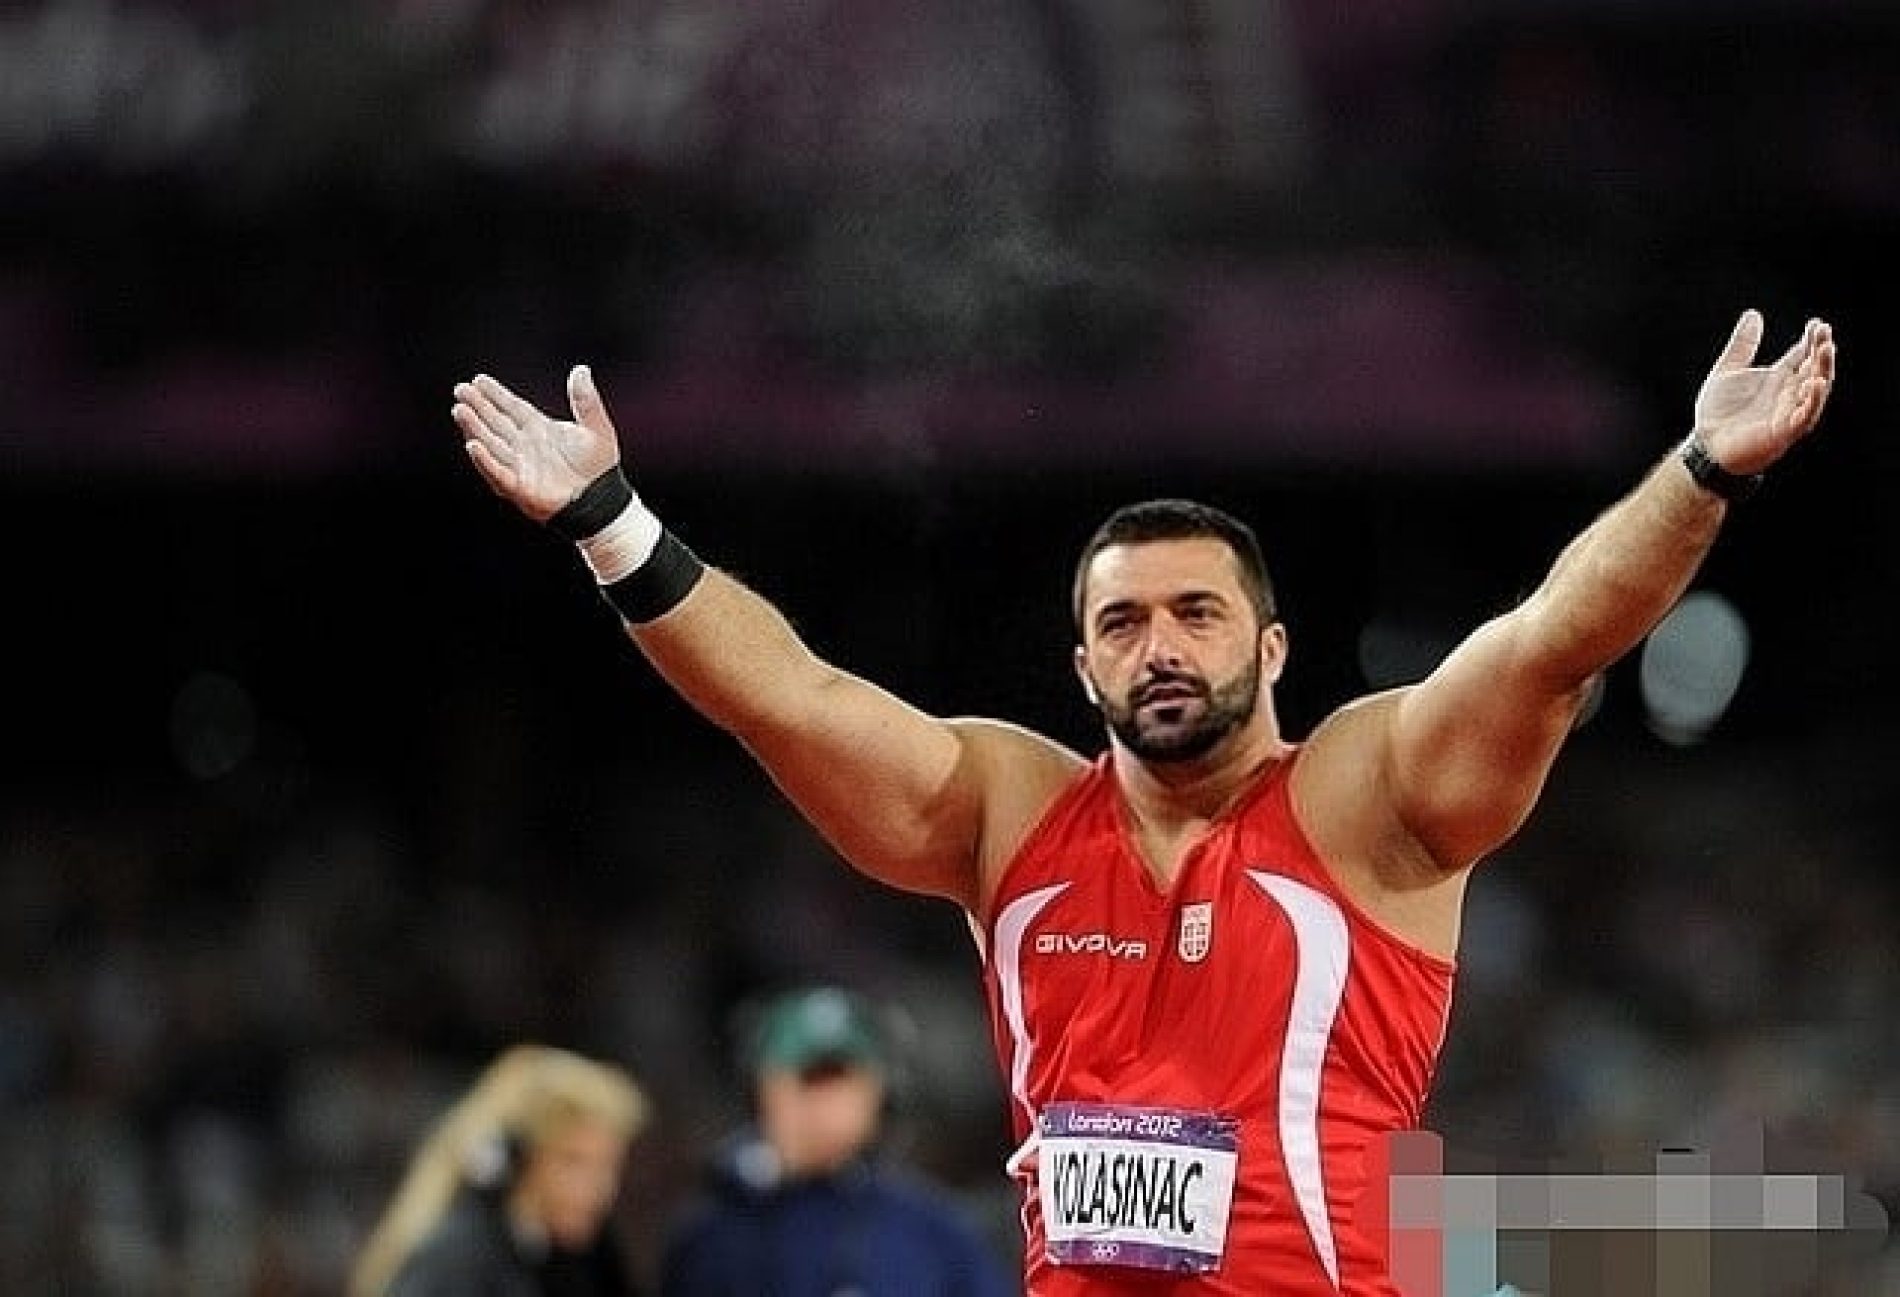 Sandžaku pomažu mnogi,  atletičar Asmir Kolašinac volontira i nosi boce s kisikom